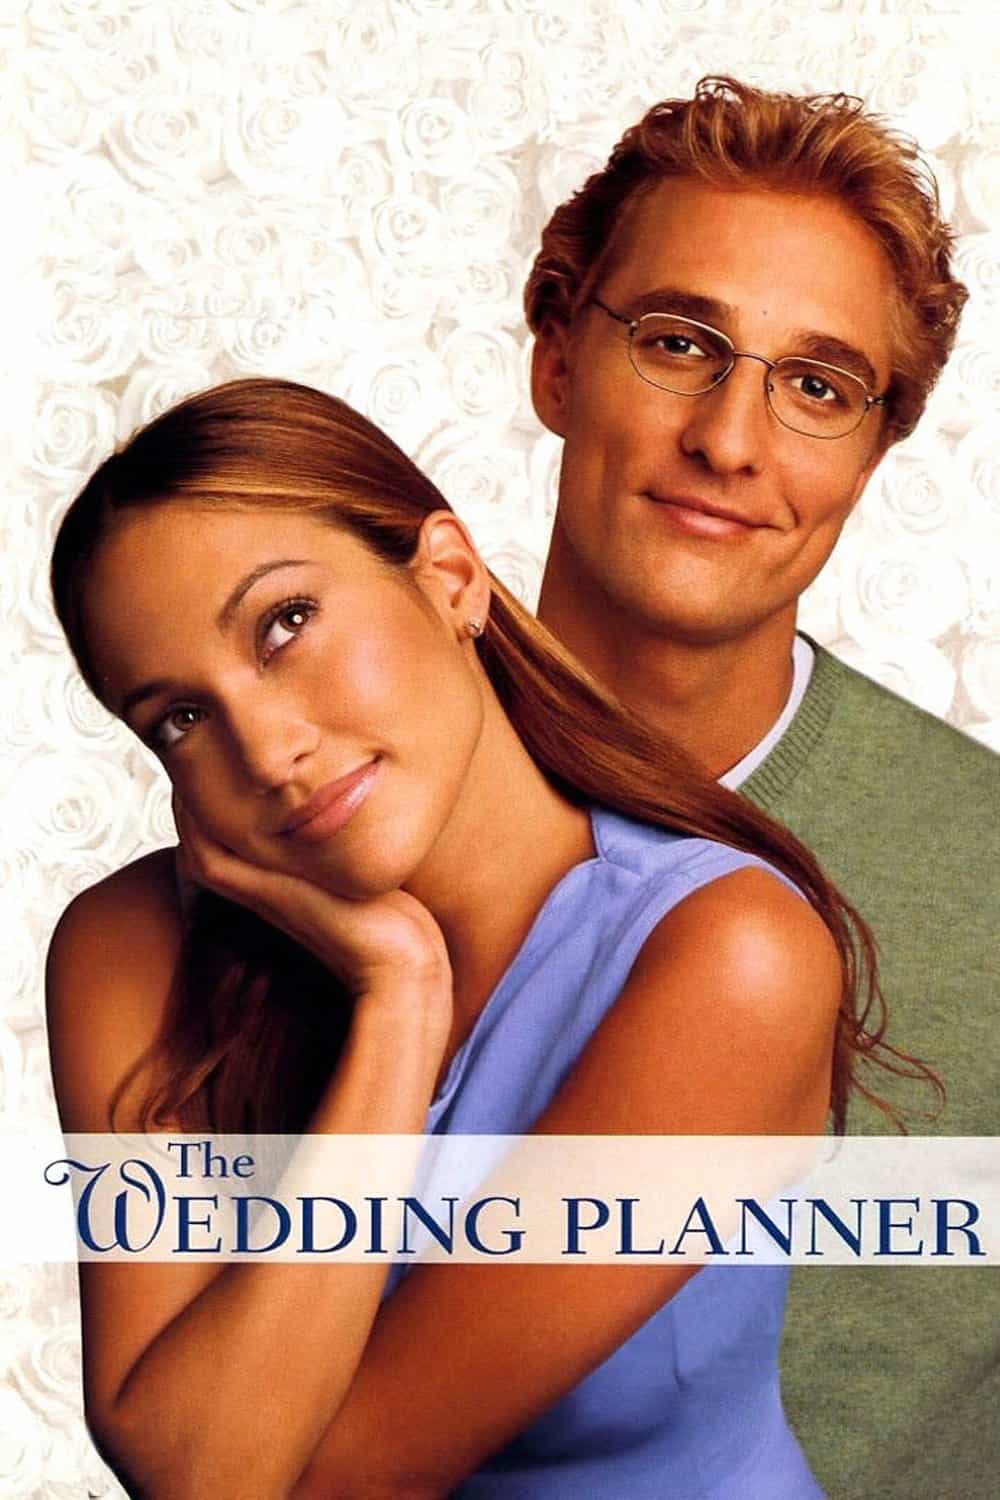 The Wedding Planner, 2001 